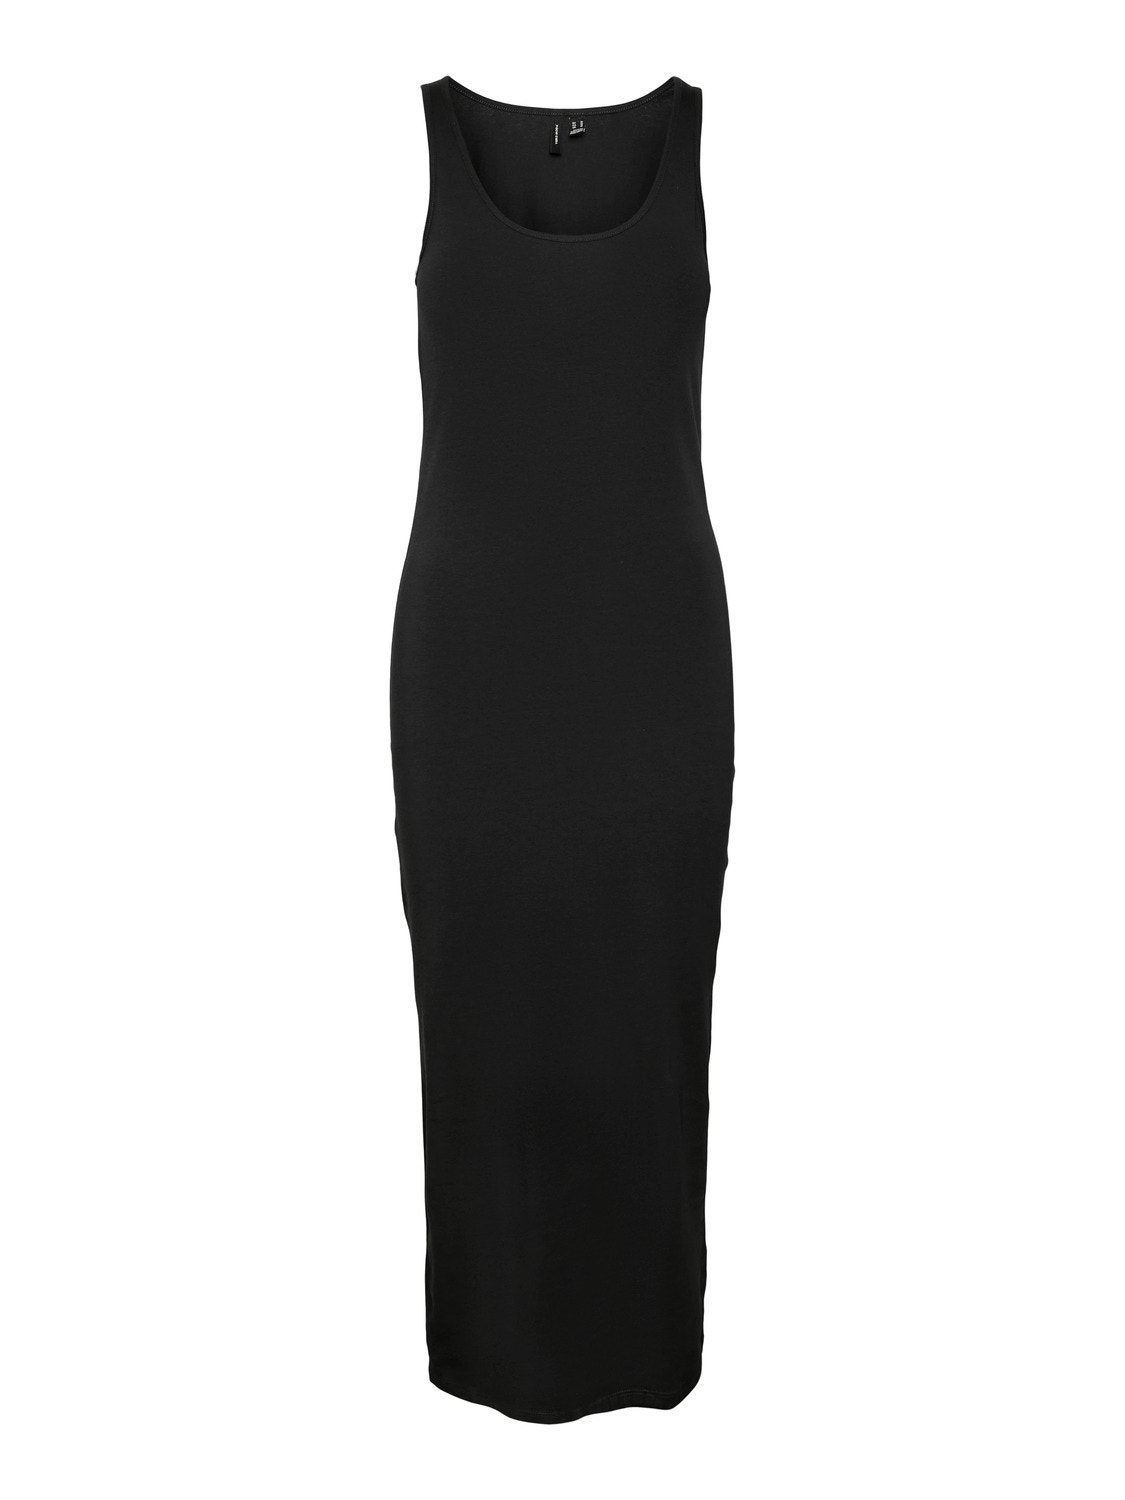 Vero Moda VMMAXI Long dress -Black - 10305781